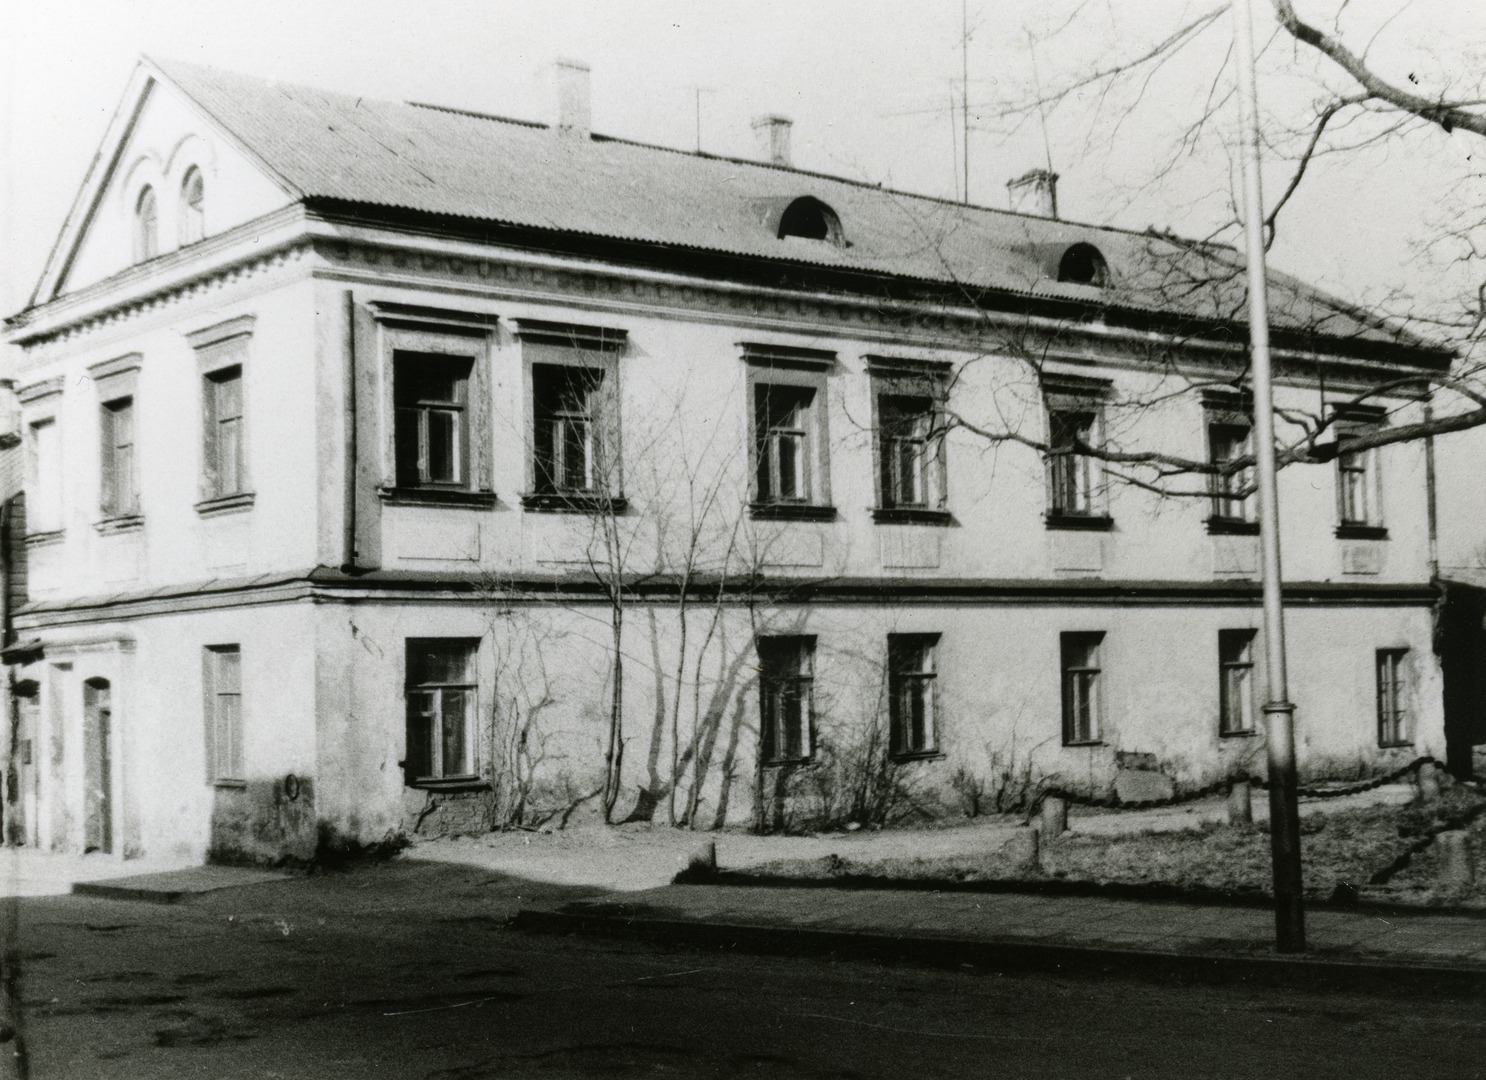 Building on Pikal Street, where Rakvere Teachers’ Seminar Training School was located